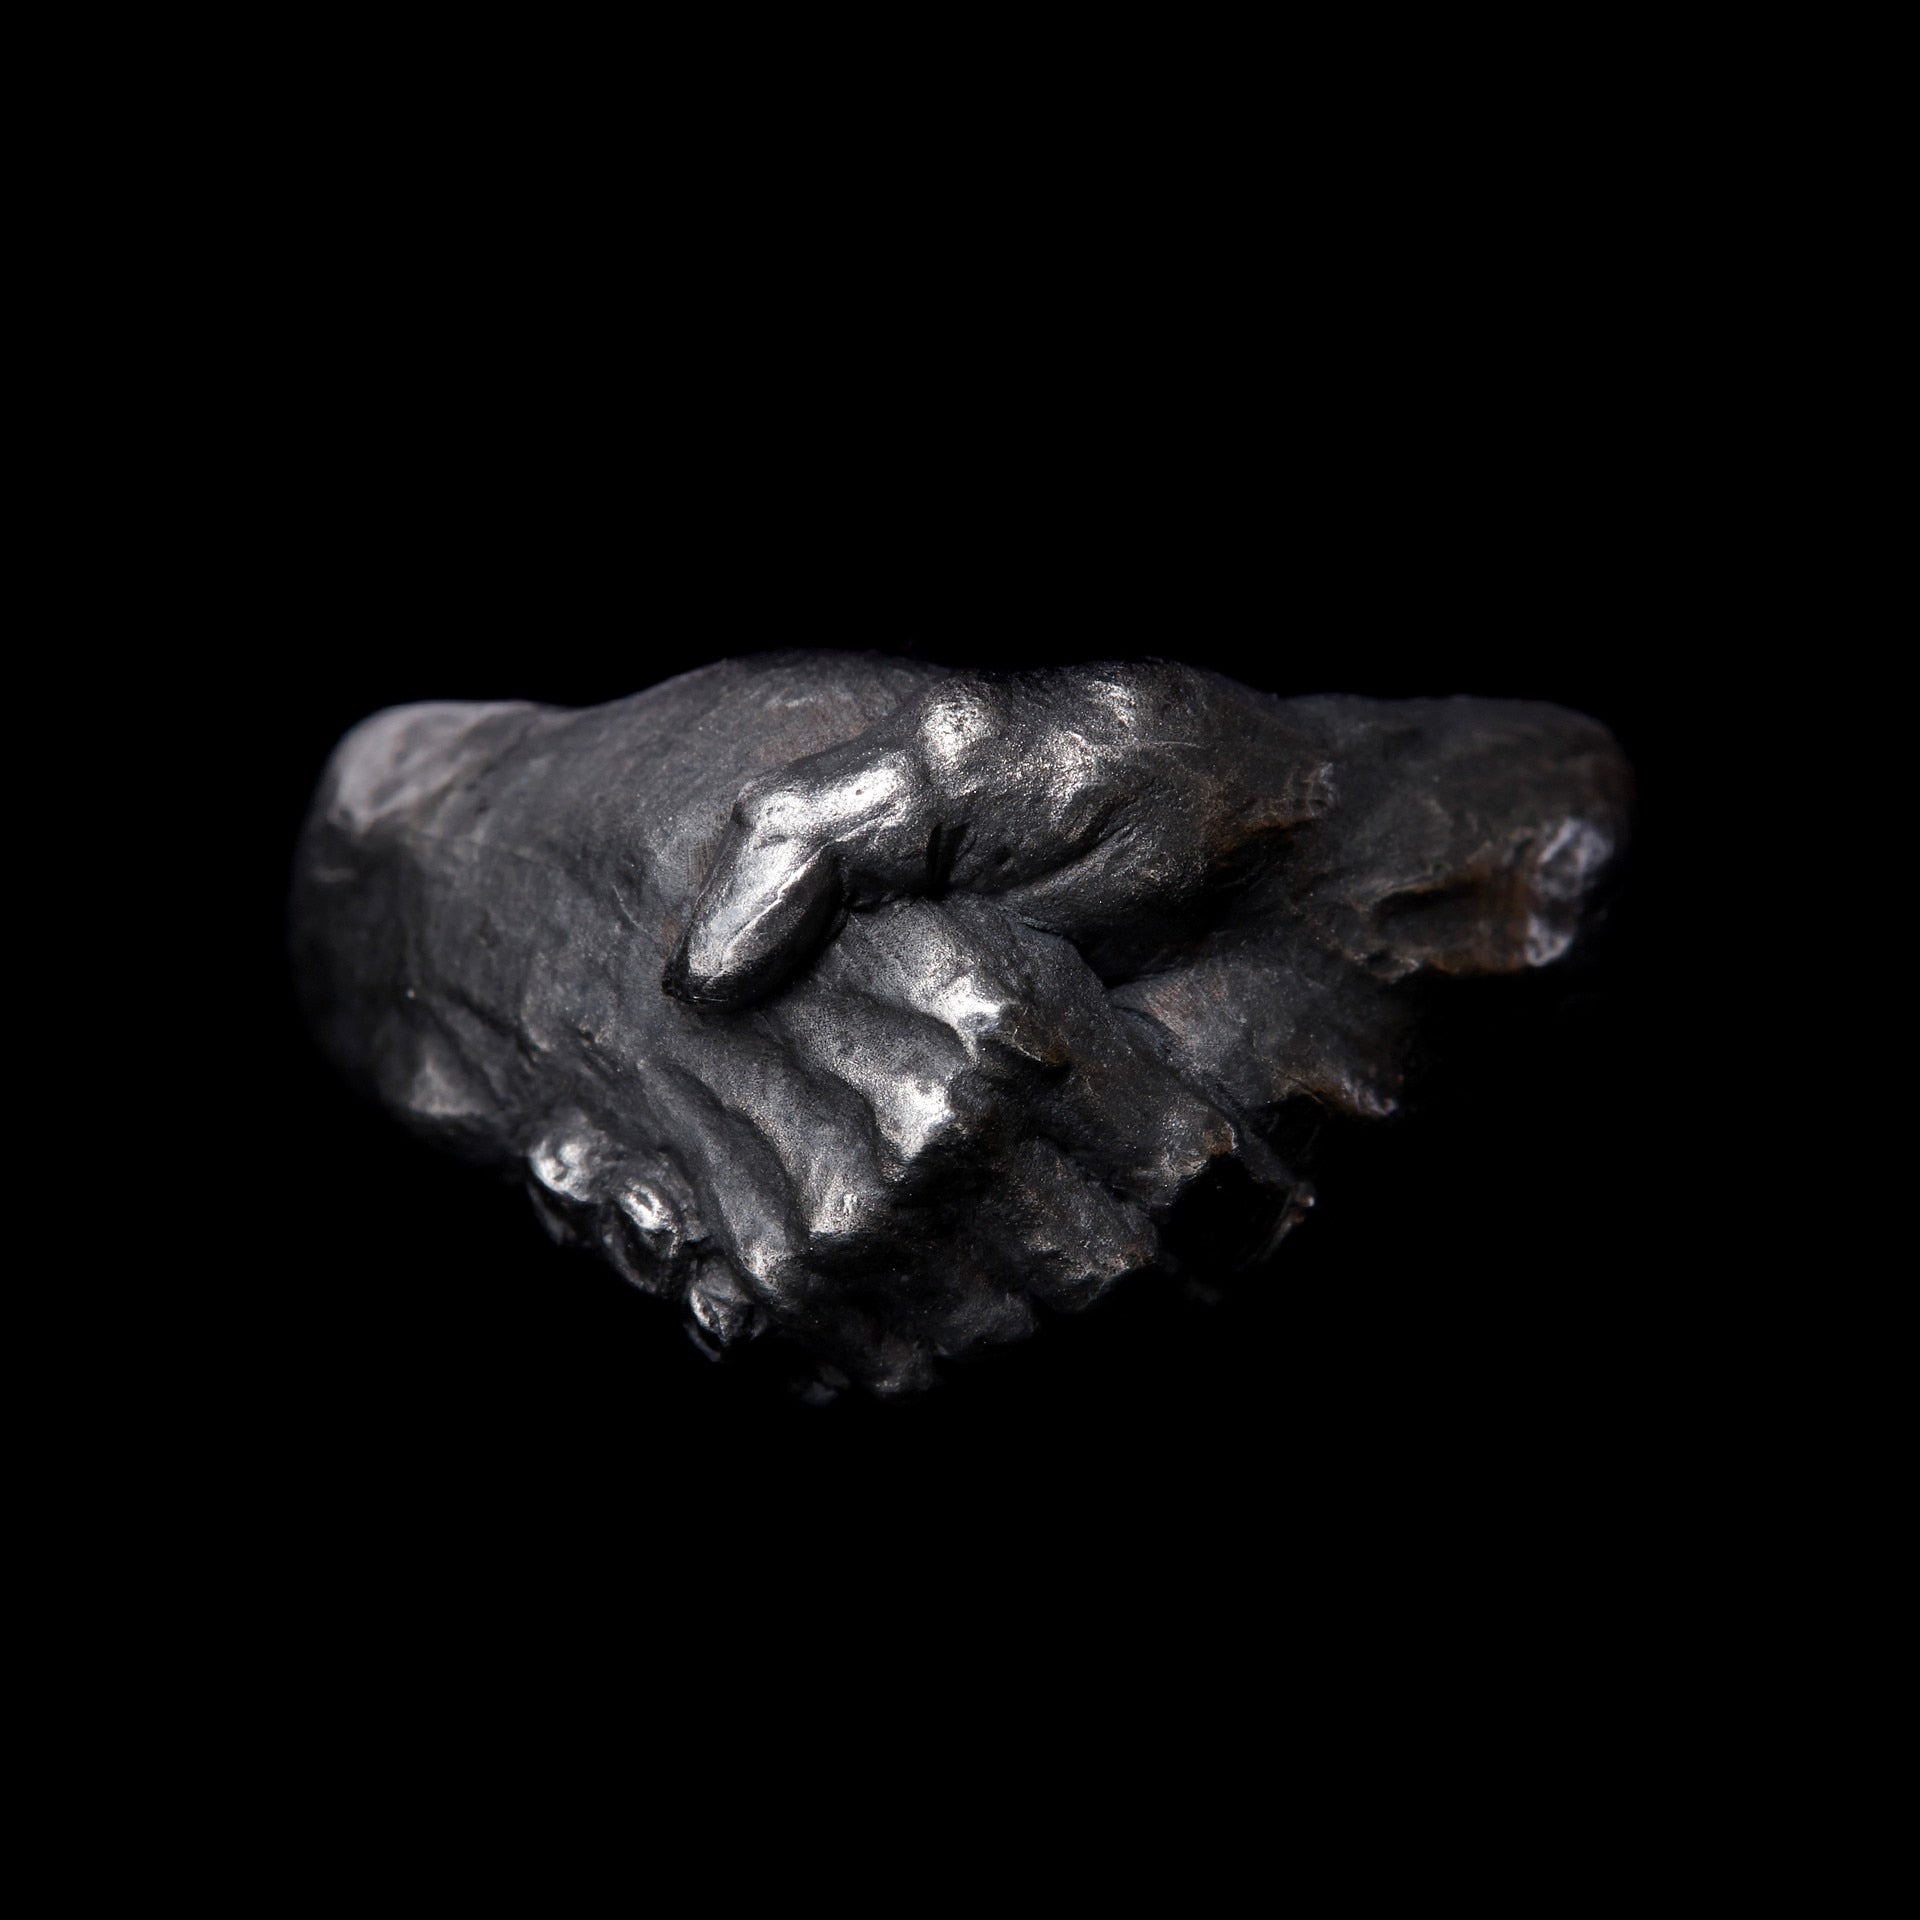 Handshake Ring - Chrome Cult